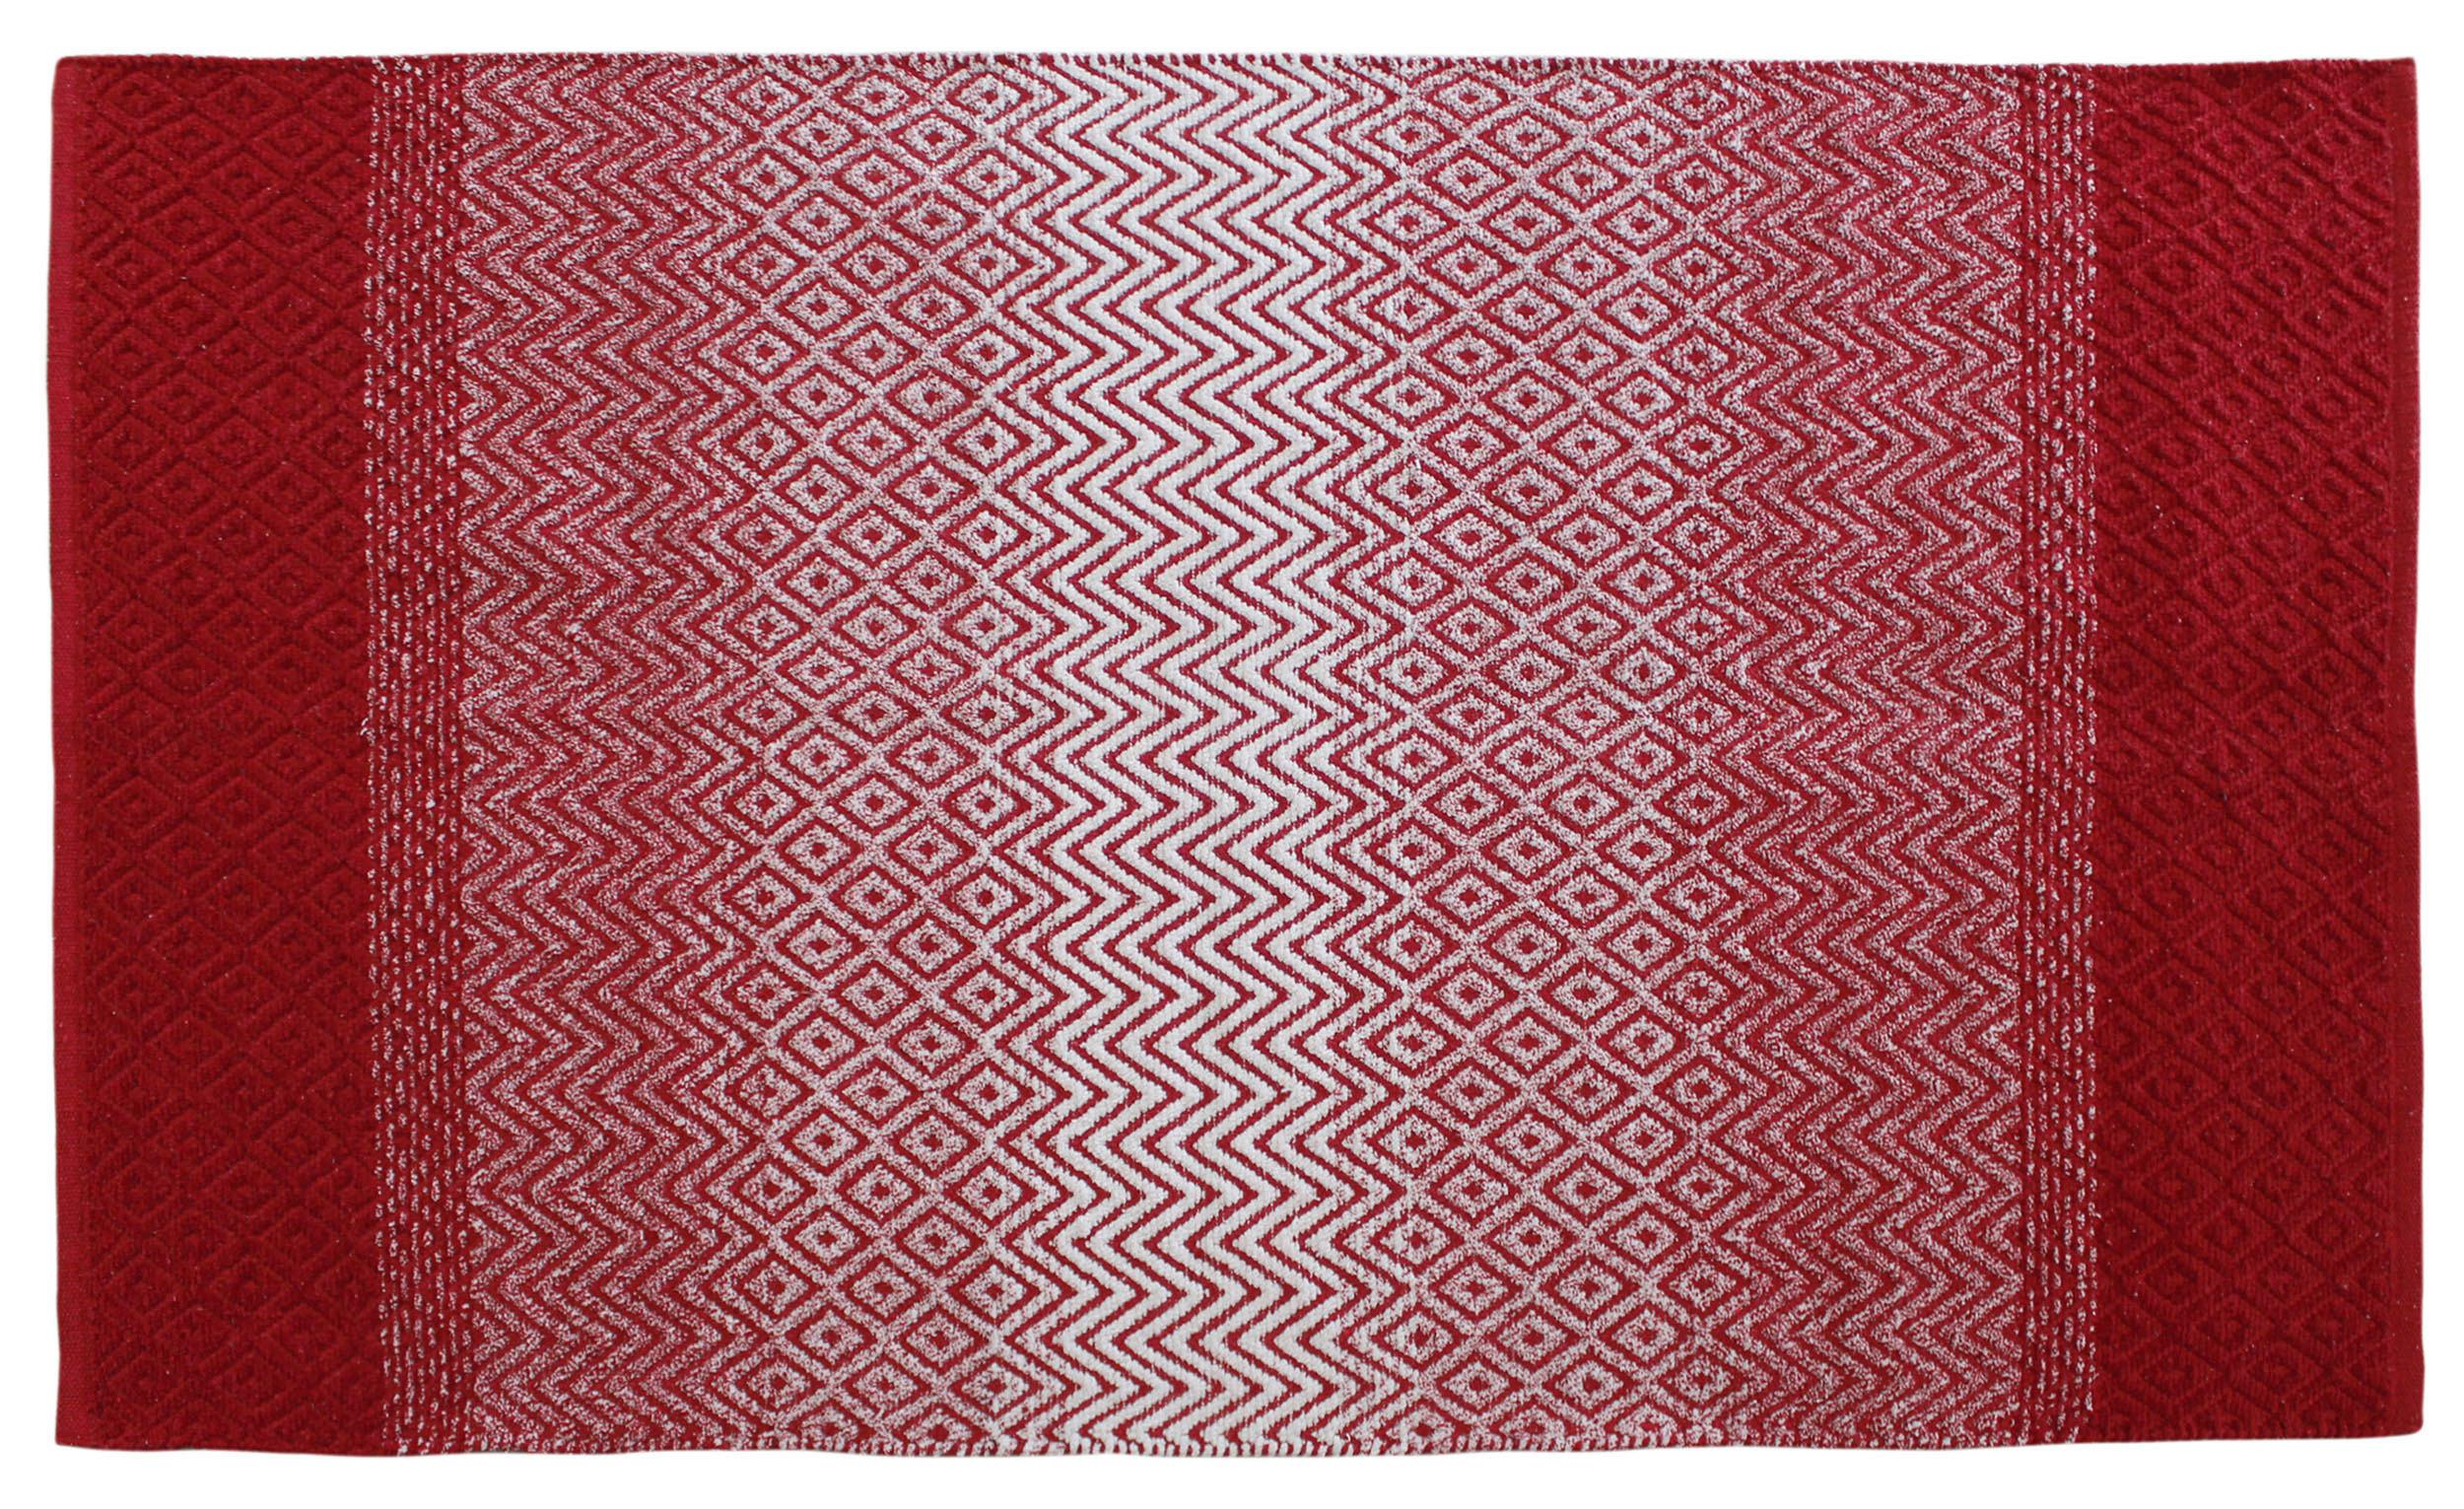 Handwebteppich Malta in Rot ca. 70x140cm - Rot, Basics, Textil (70/140cm) - Modern Living